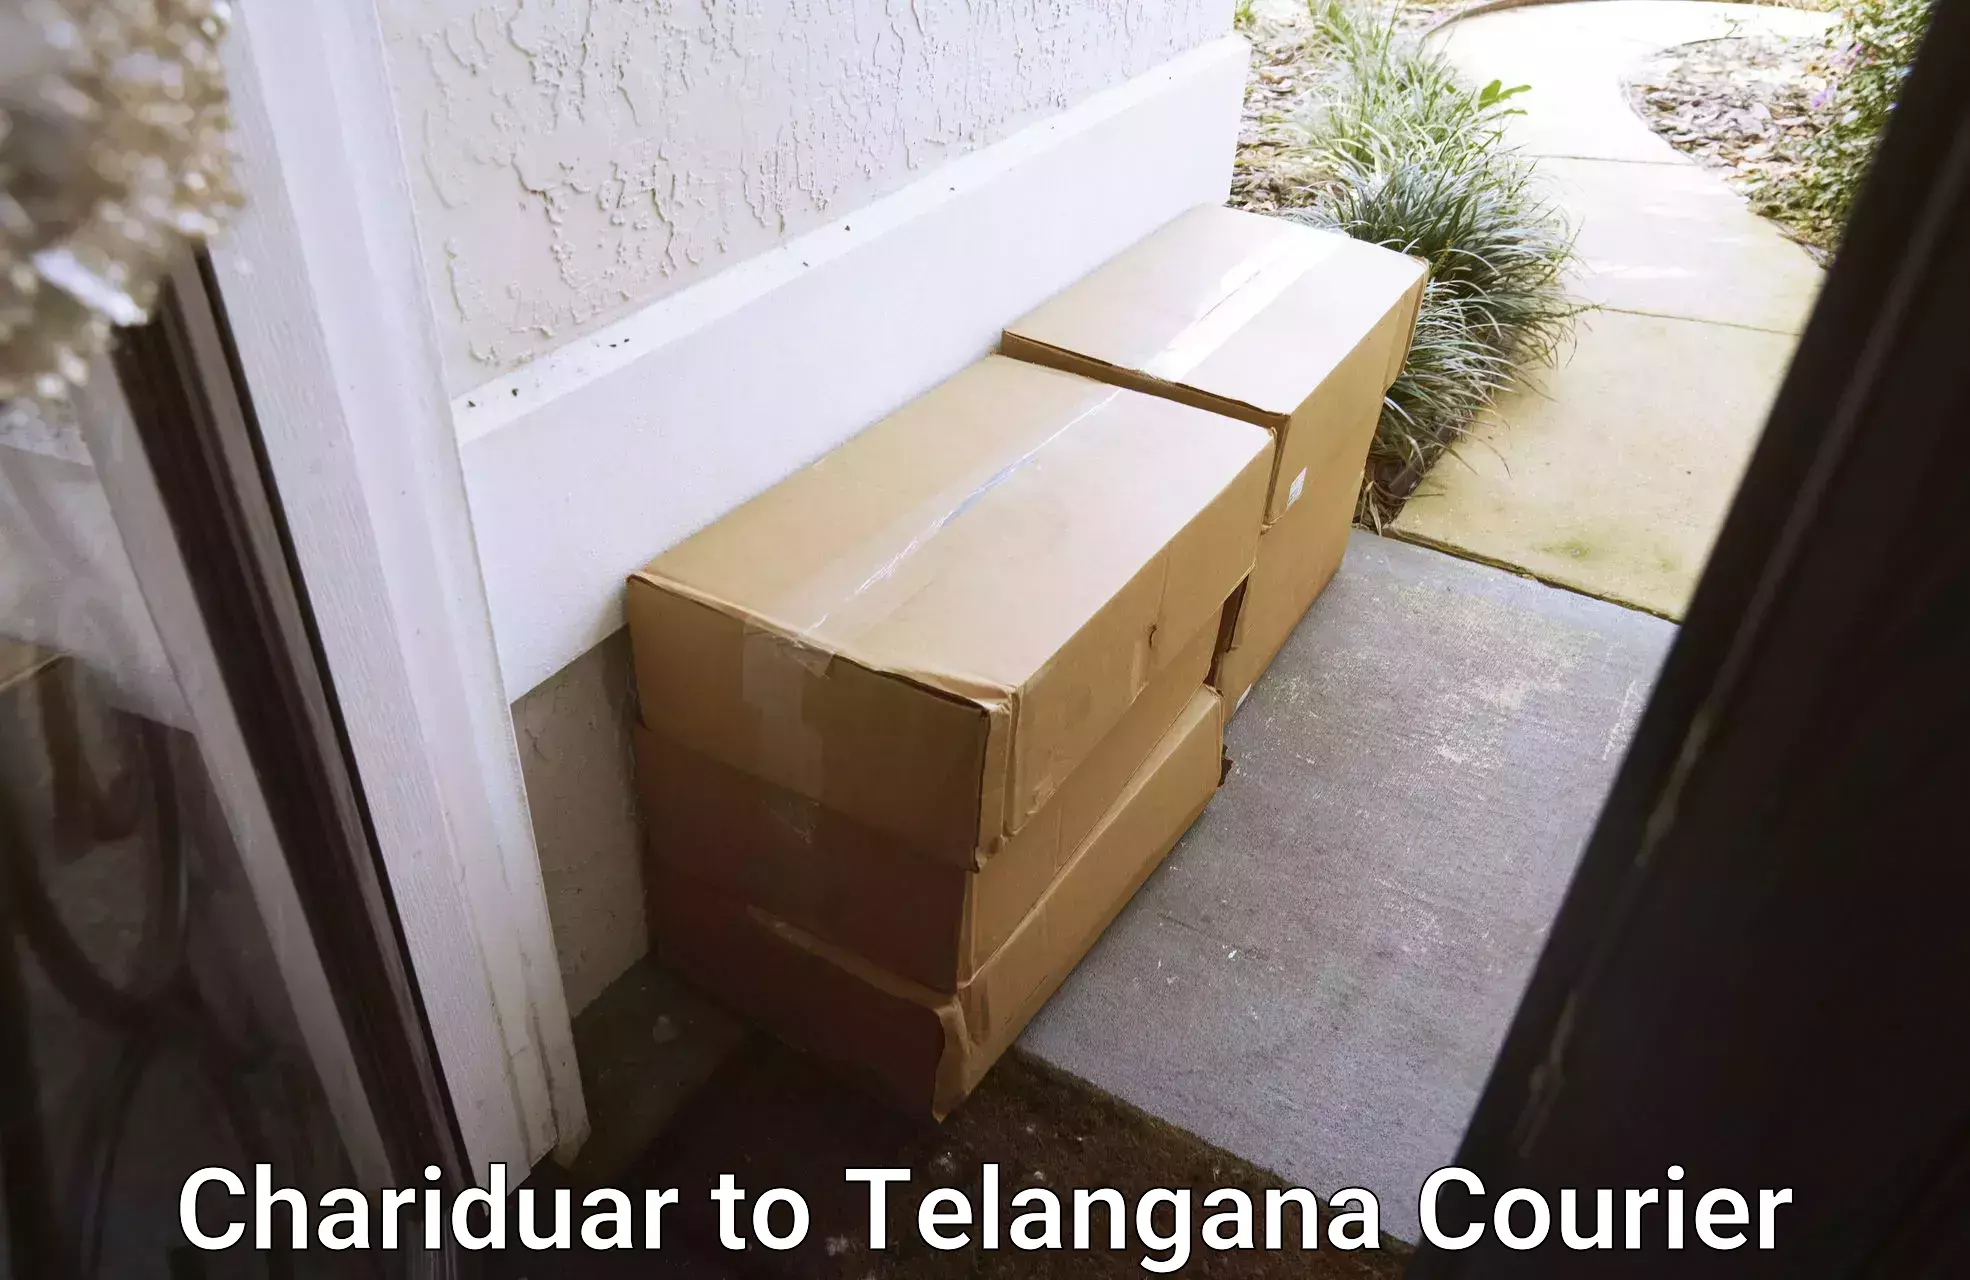 Door-to-door freight service Chariduar to Telangana